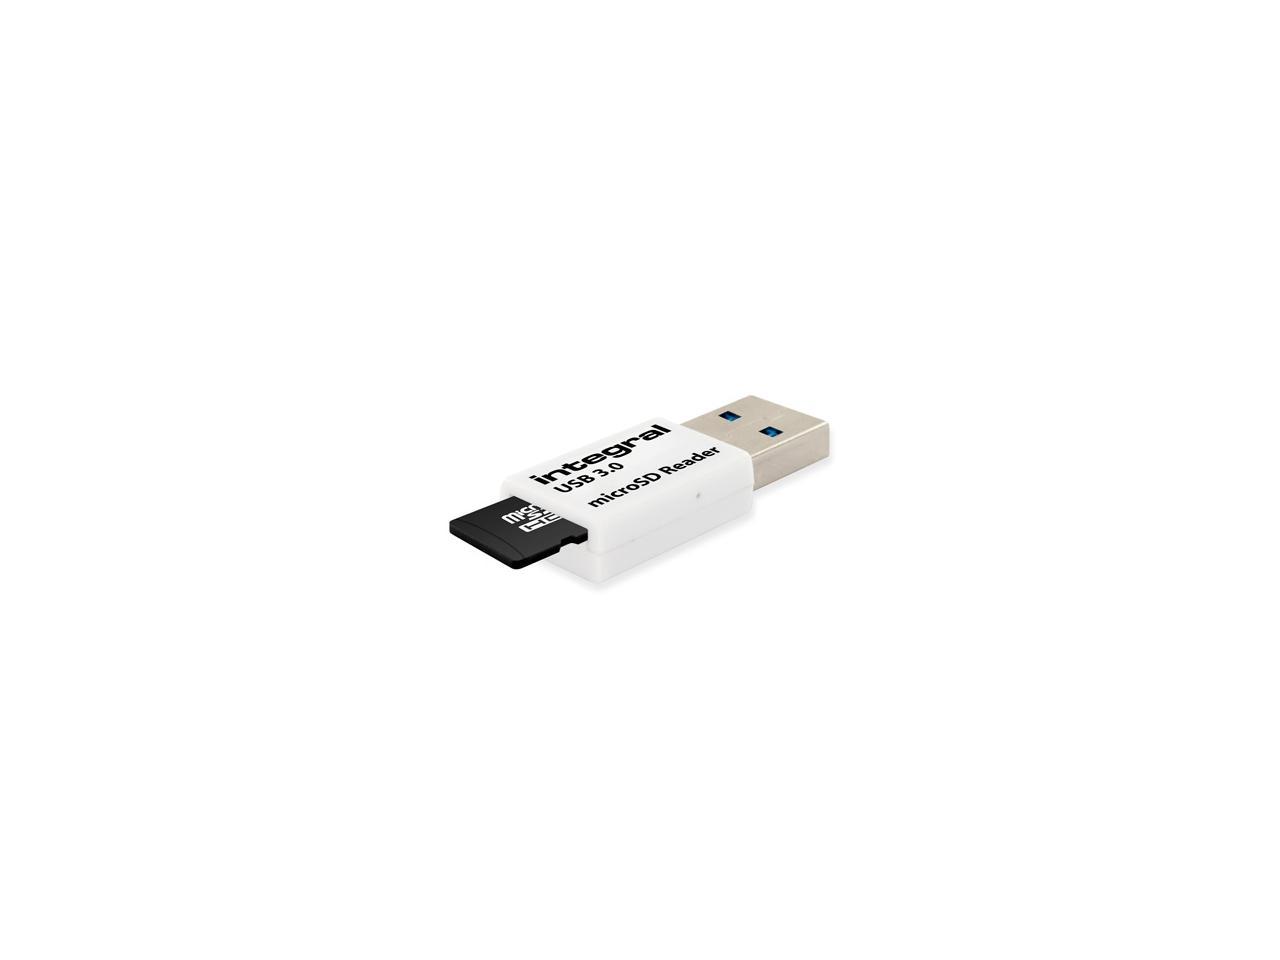 Integral microSDHC / microSDXC USB 3.0 Card Reader